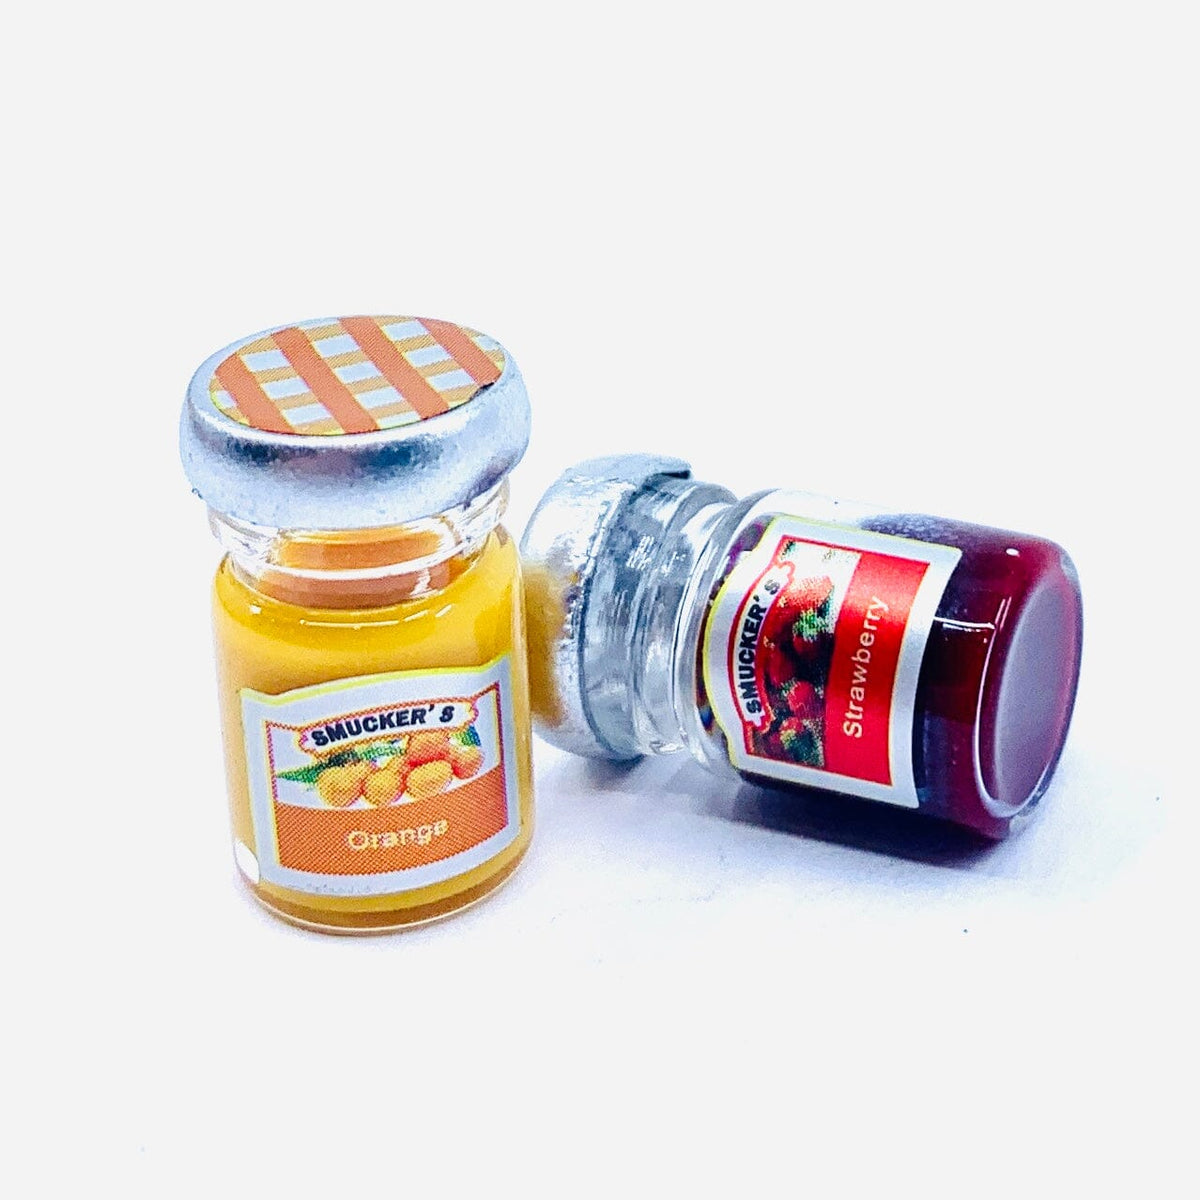 Tiniest Jam Jars Miniature - 